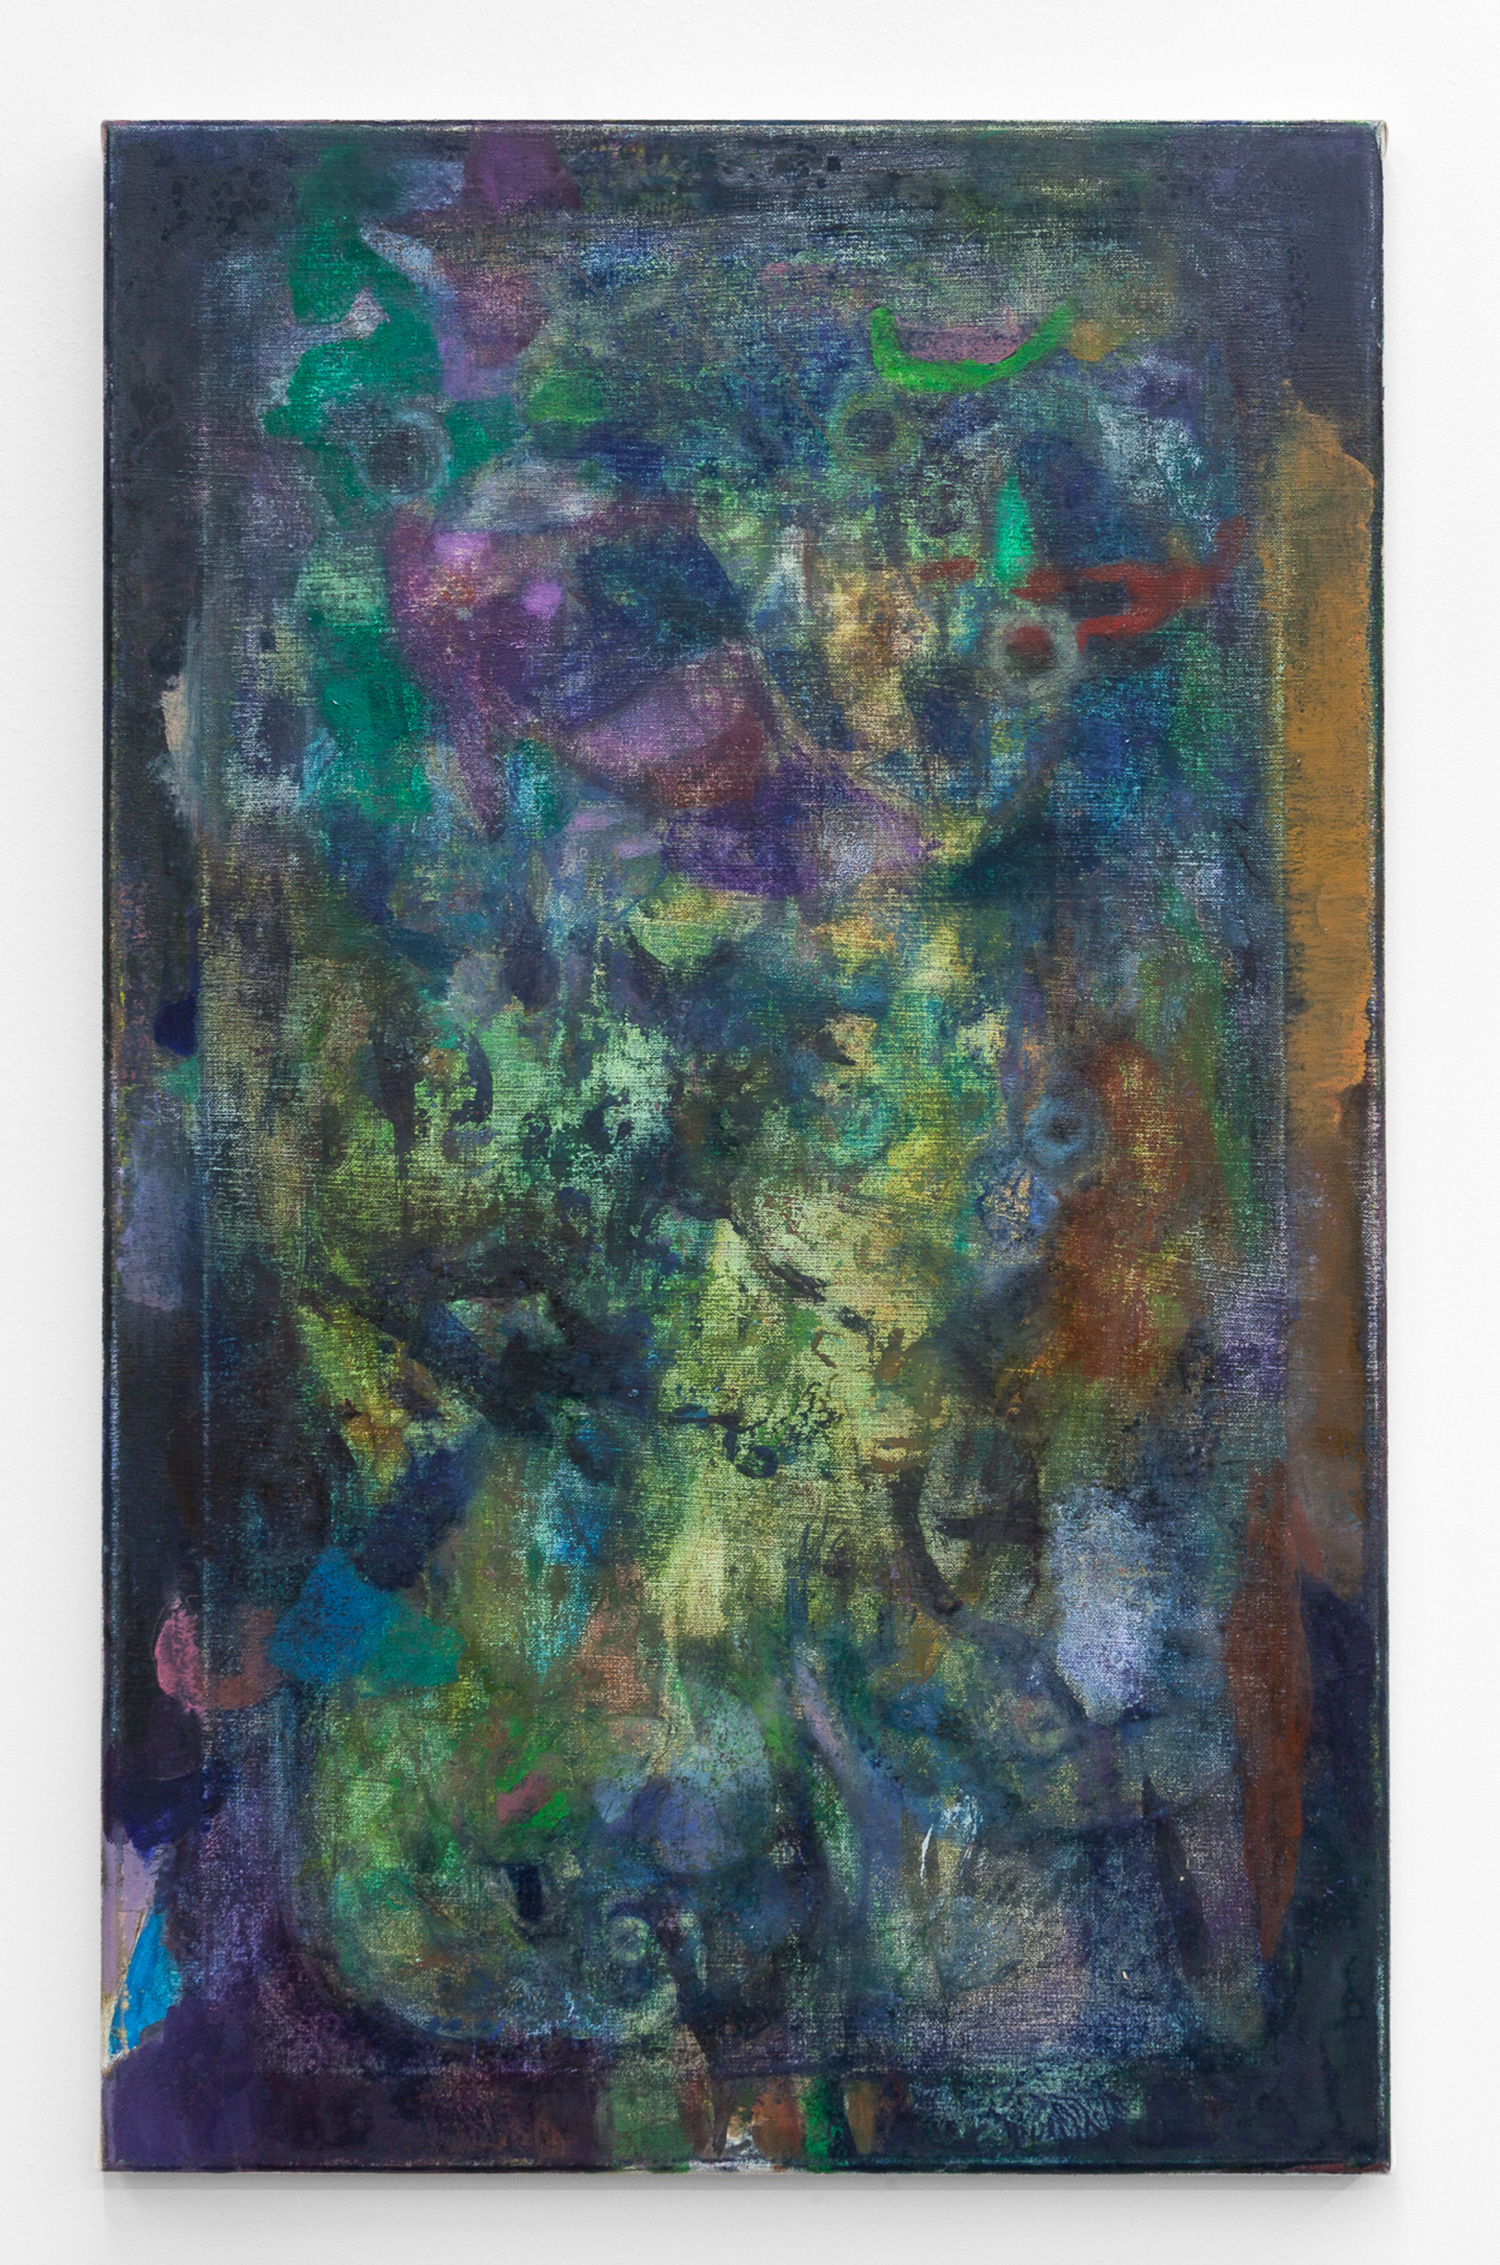  Pierres, 2019  80 x 50 cm. oil on canvas 